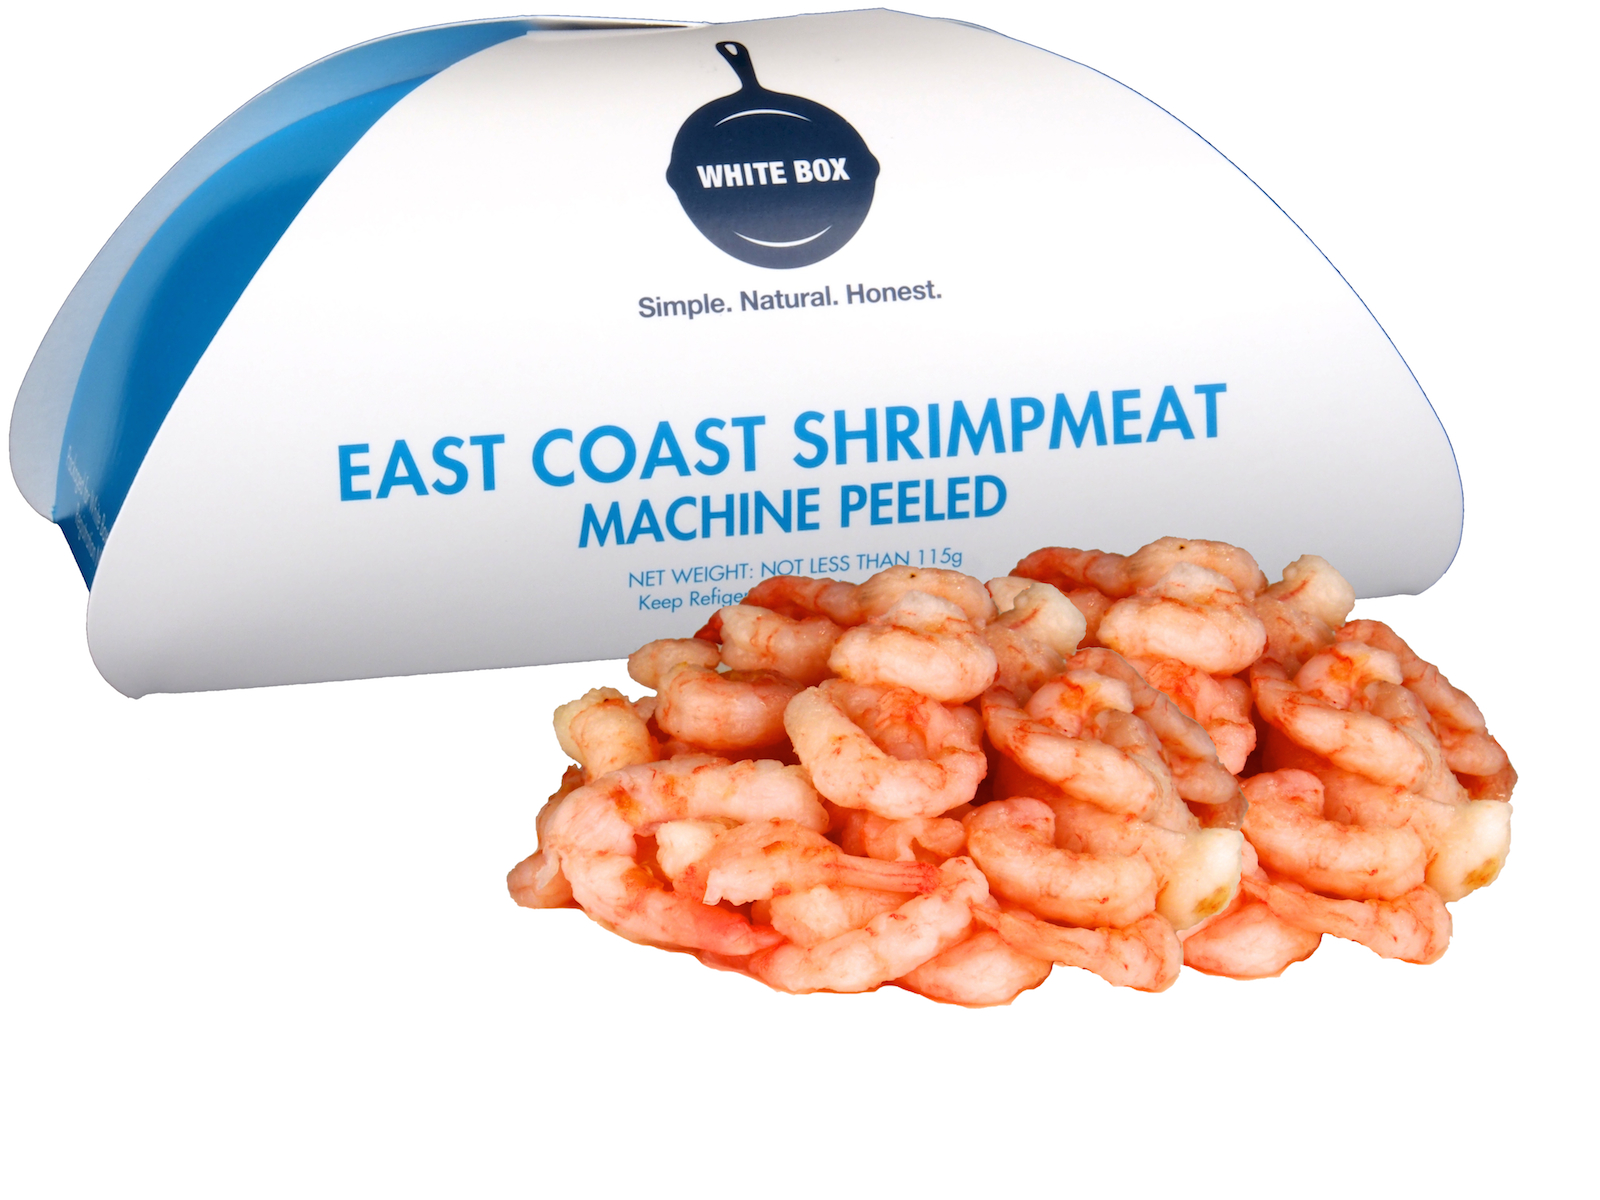 East Coast Shrimpmeat with Box.jpg